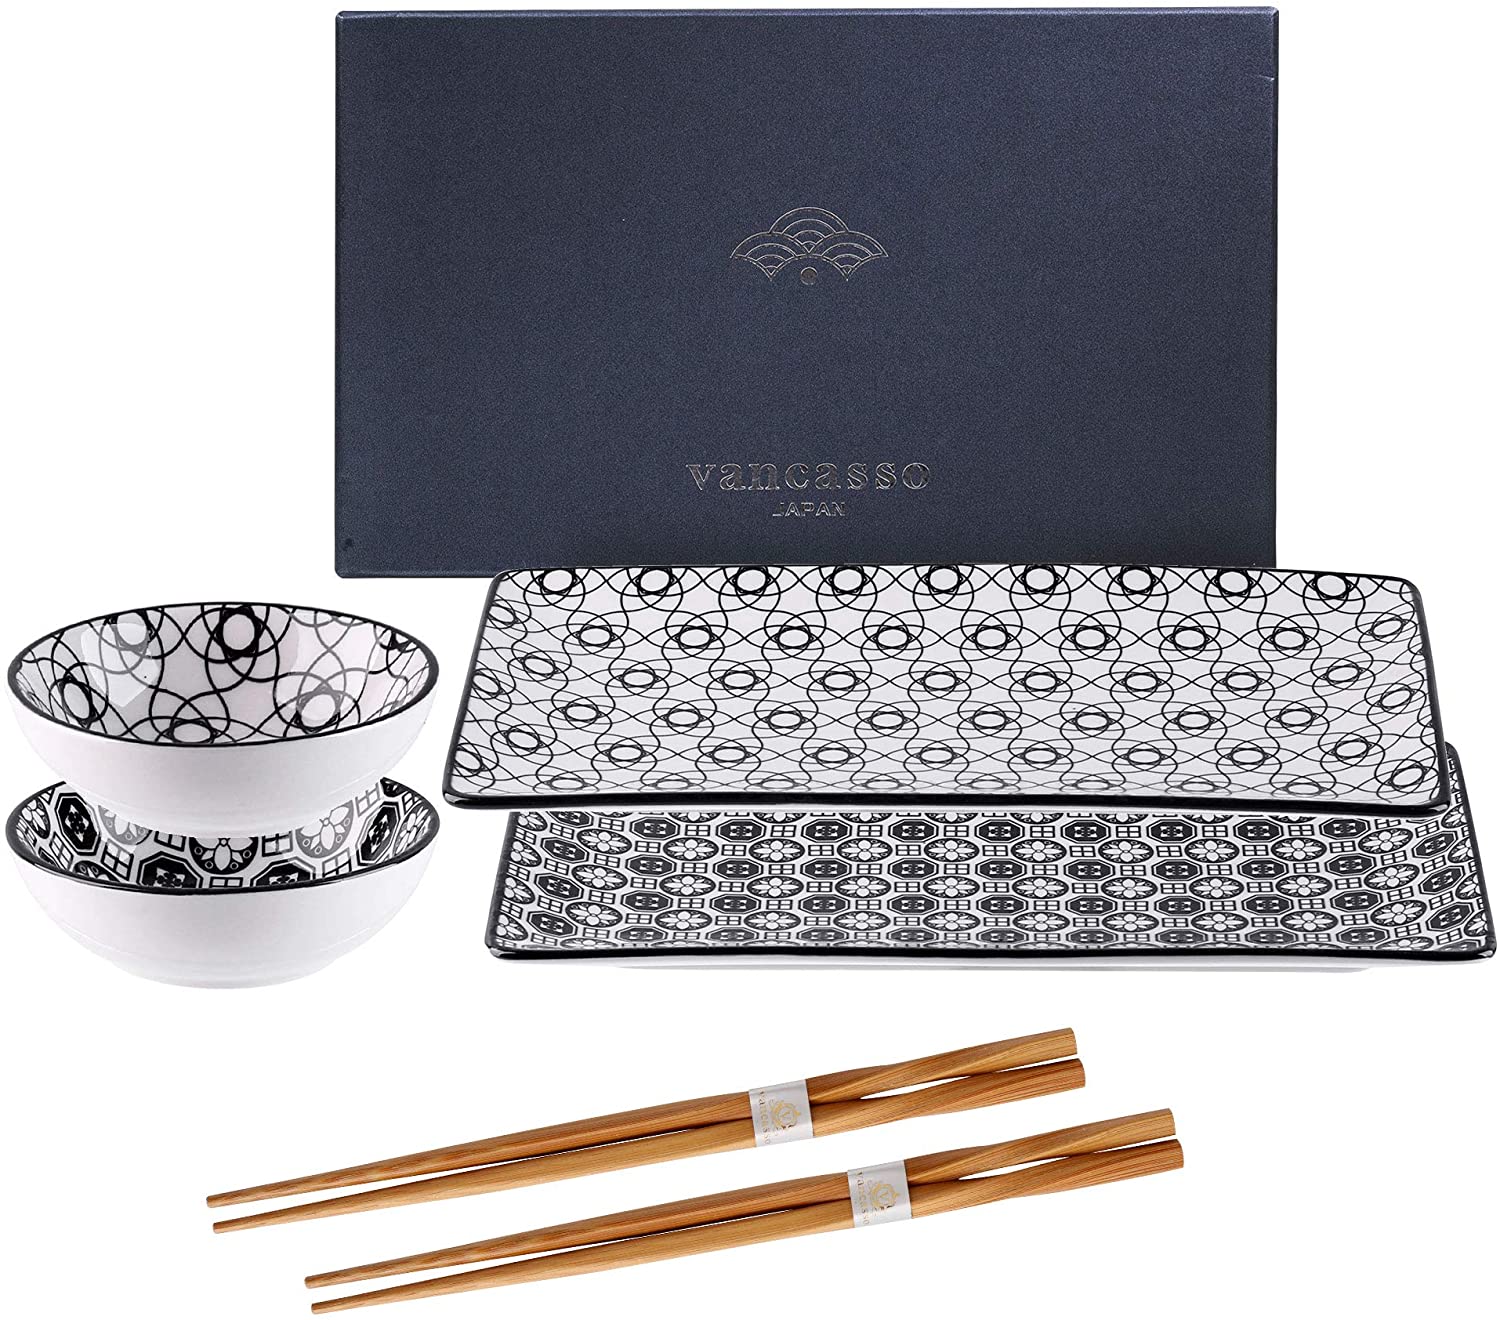 Vancasso Haruka Series Porcelain Crockery Set